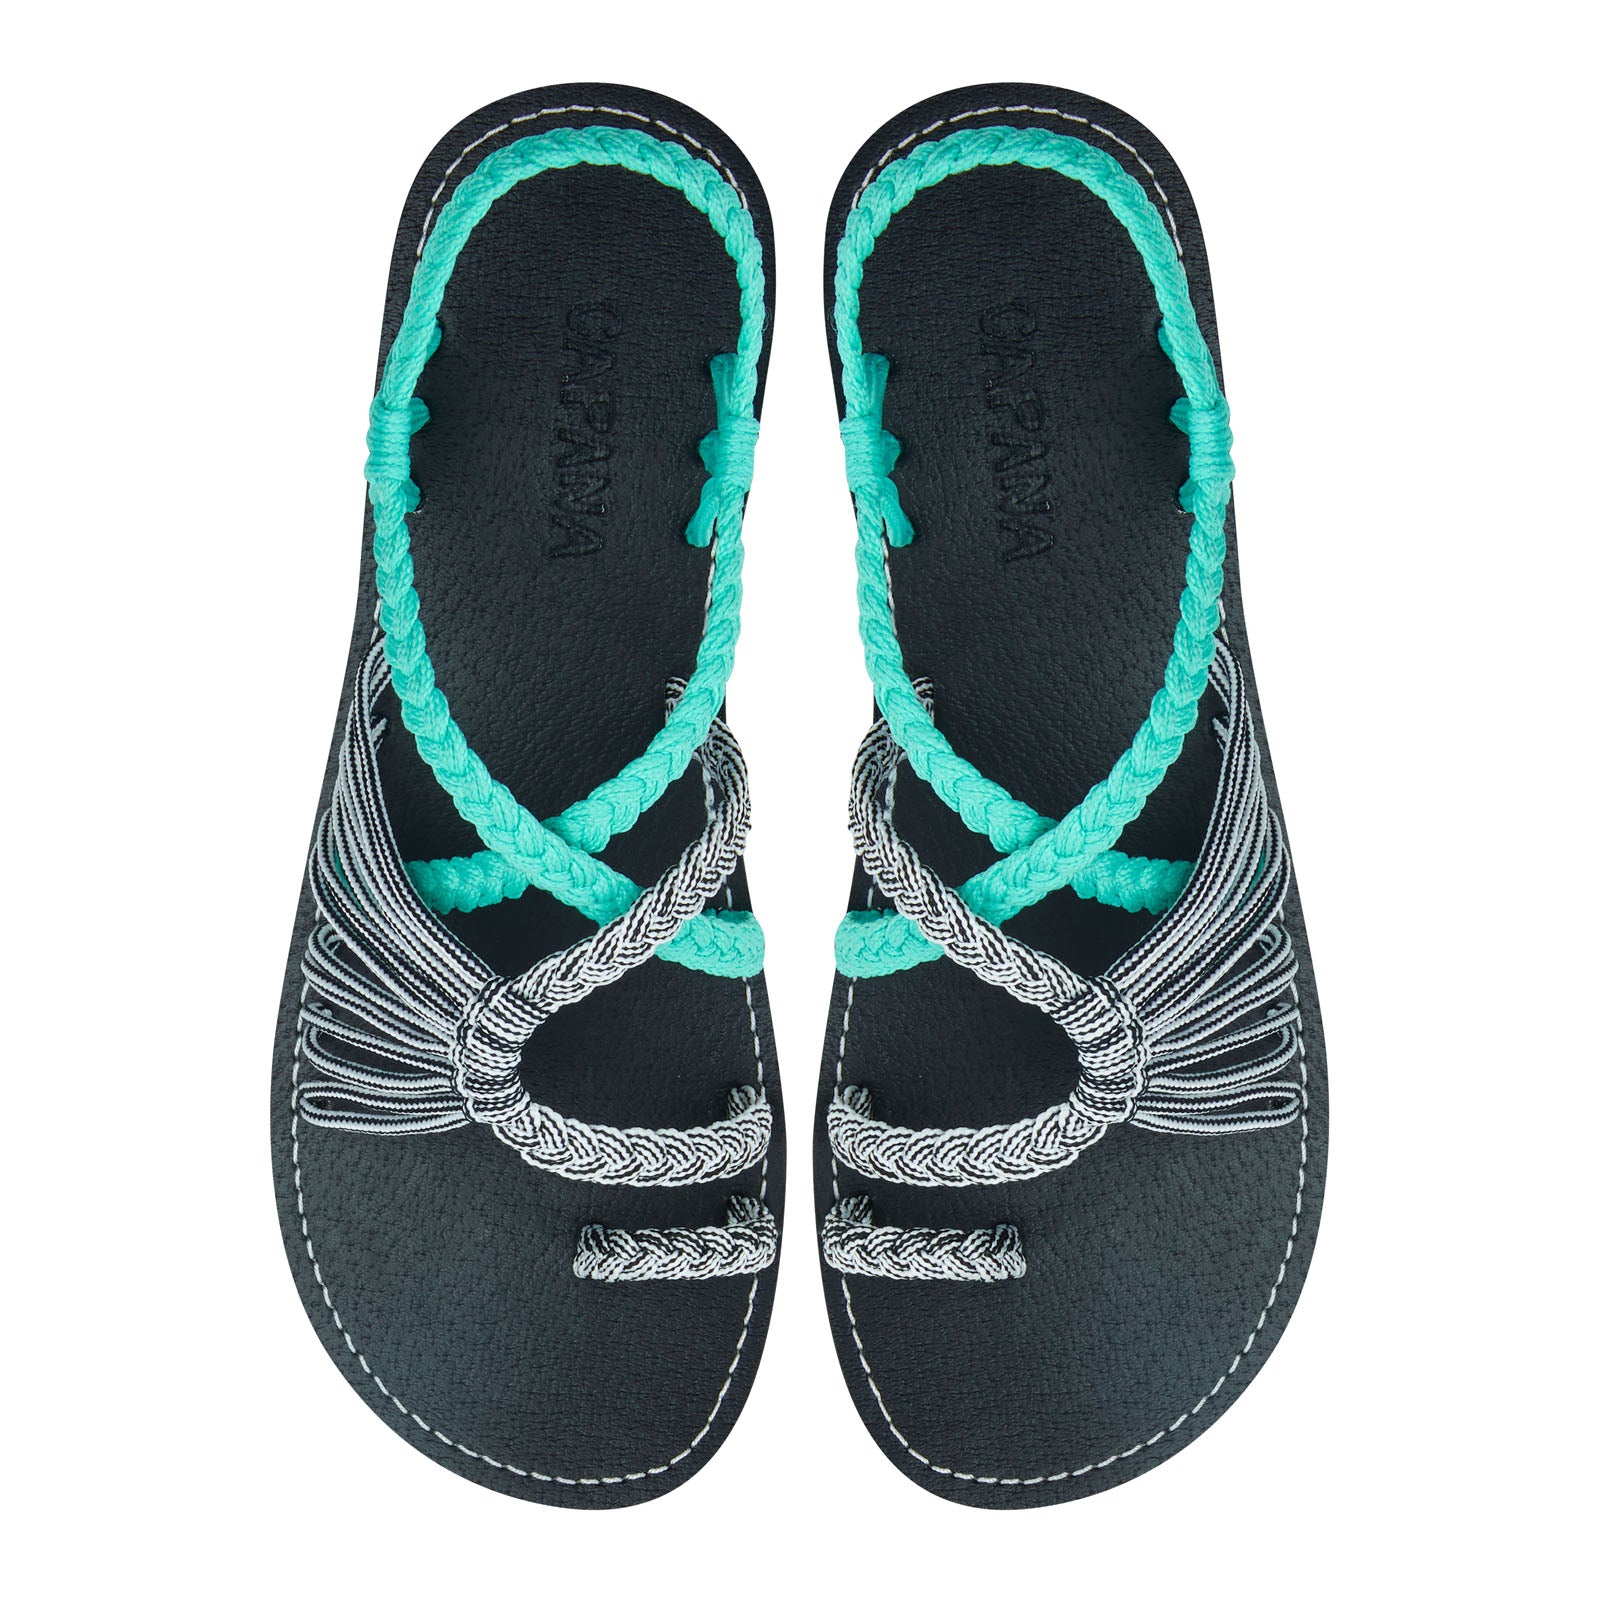 Commune Turquoise Zebra Rope Sandals Teal Black White loop design Flat sandals for women